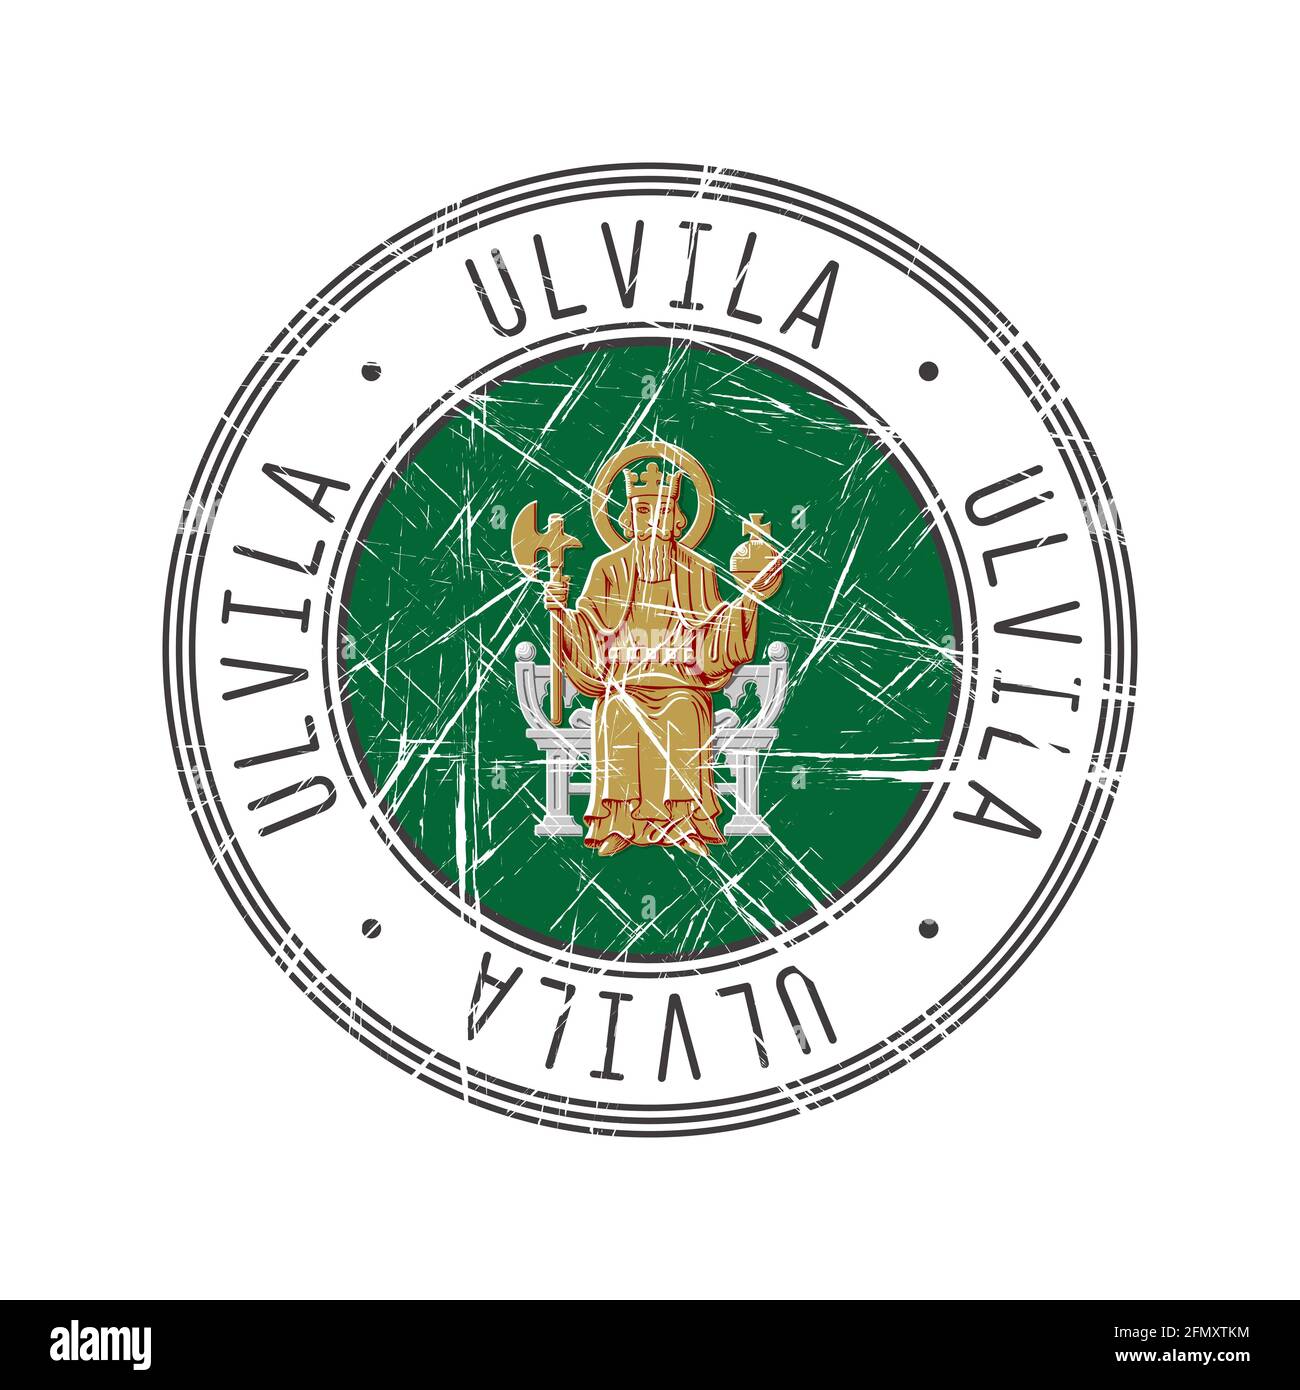 Ulvila city, Finland. Grunge postal rubber stamp over white background Stock Vector